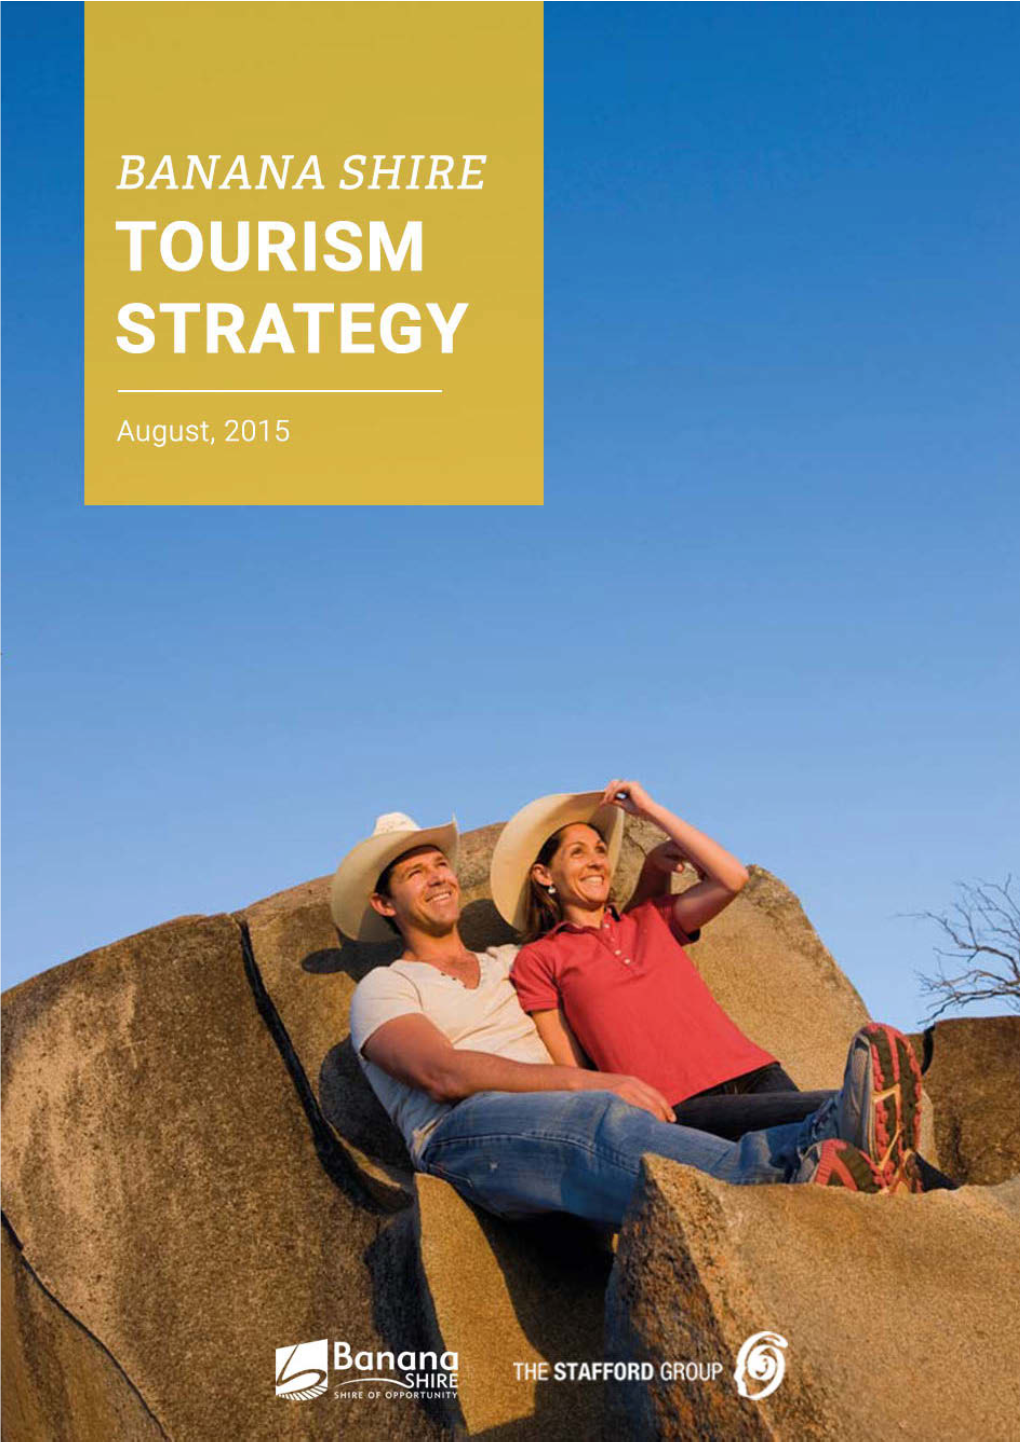 9. Tourism Action Plan